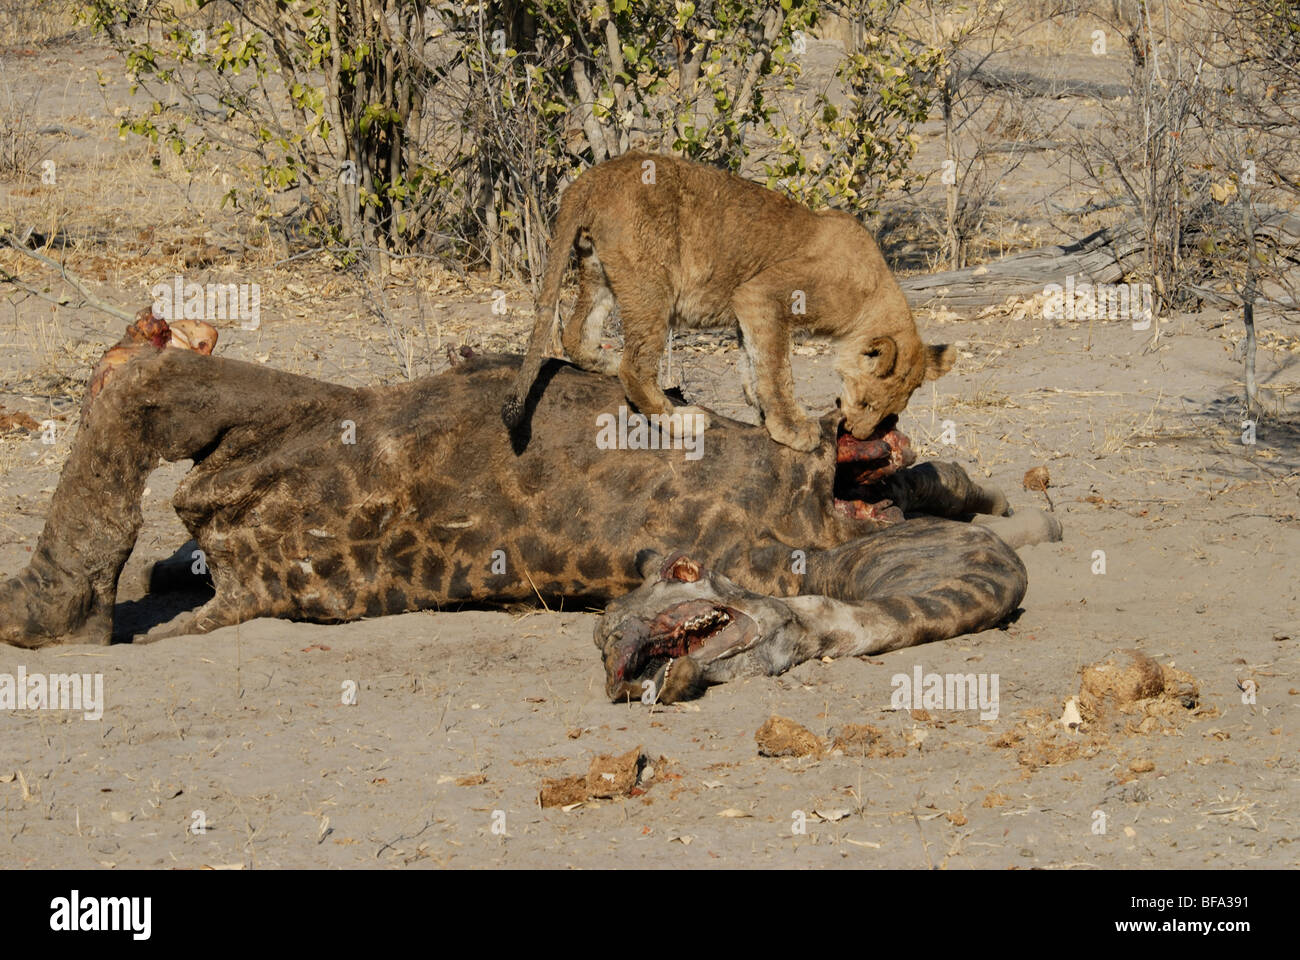 Stock photo of a young lion feeding on a giraffe carcass. Stock Photo